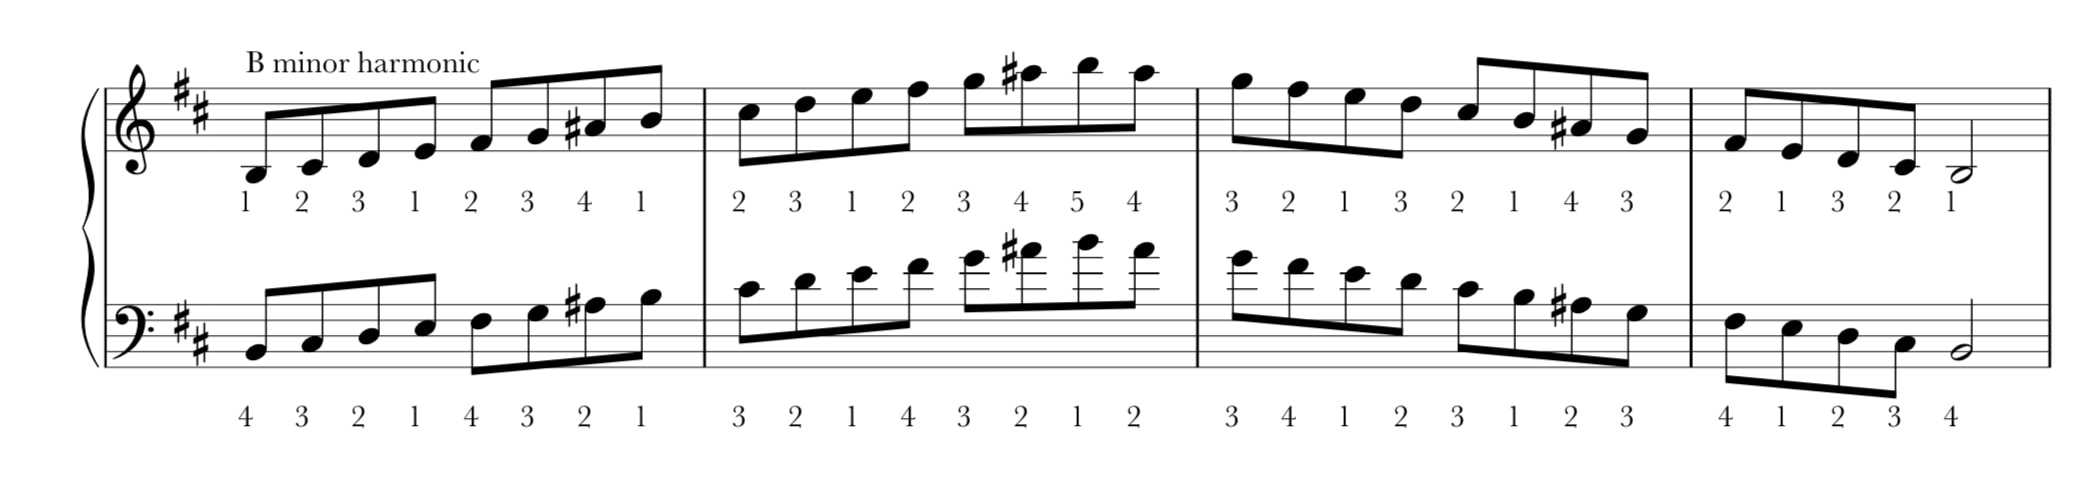 b flat melodic minor scale descending